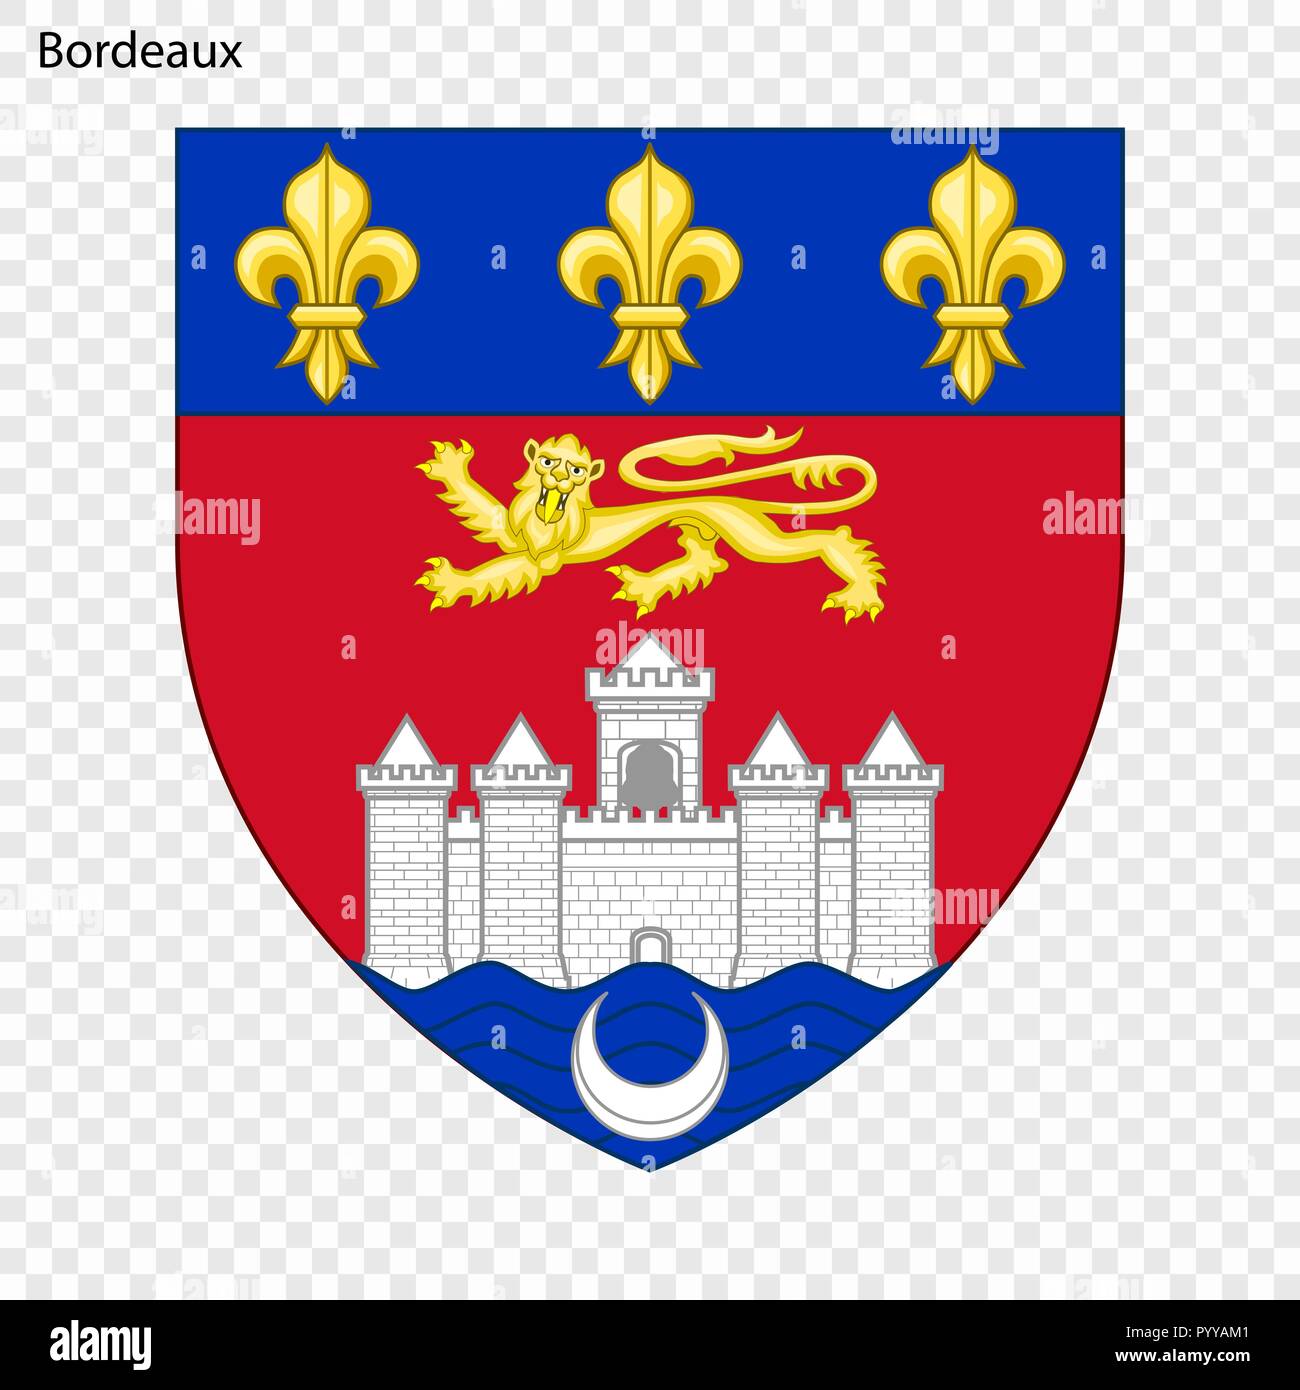 Emblem Of Bordeaux City Of France Vector Illustration Stock Vector